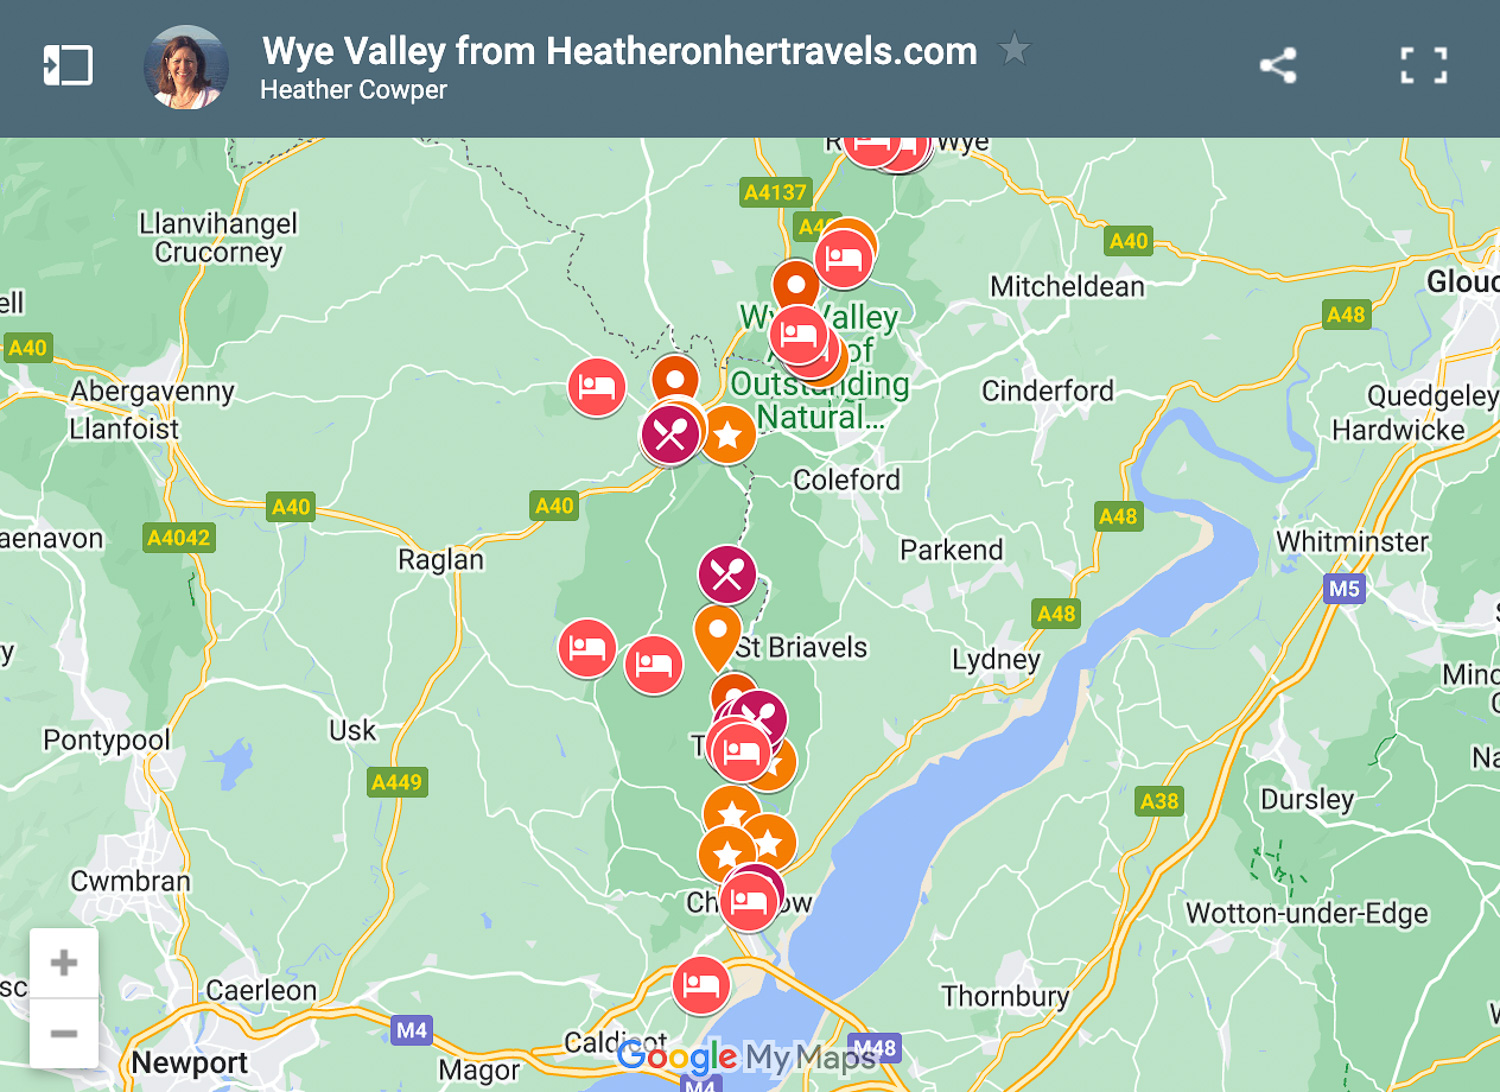 Map of Wye Valley by Heatheronhertravels.com